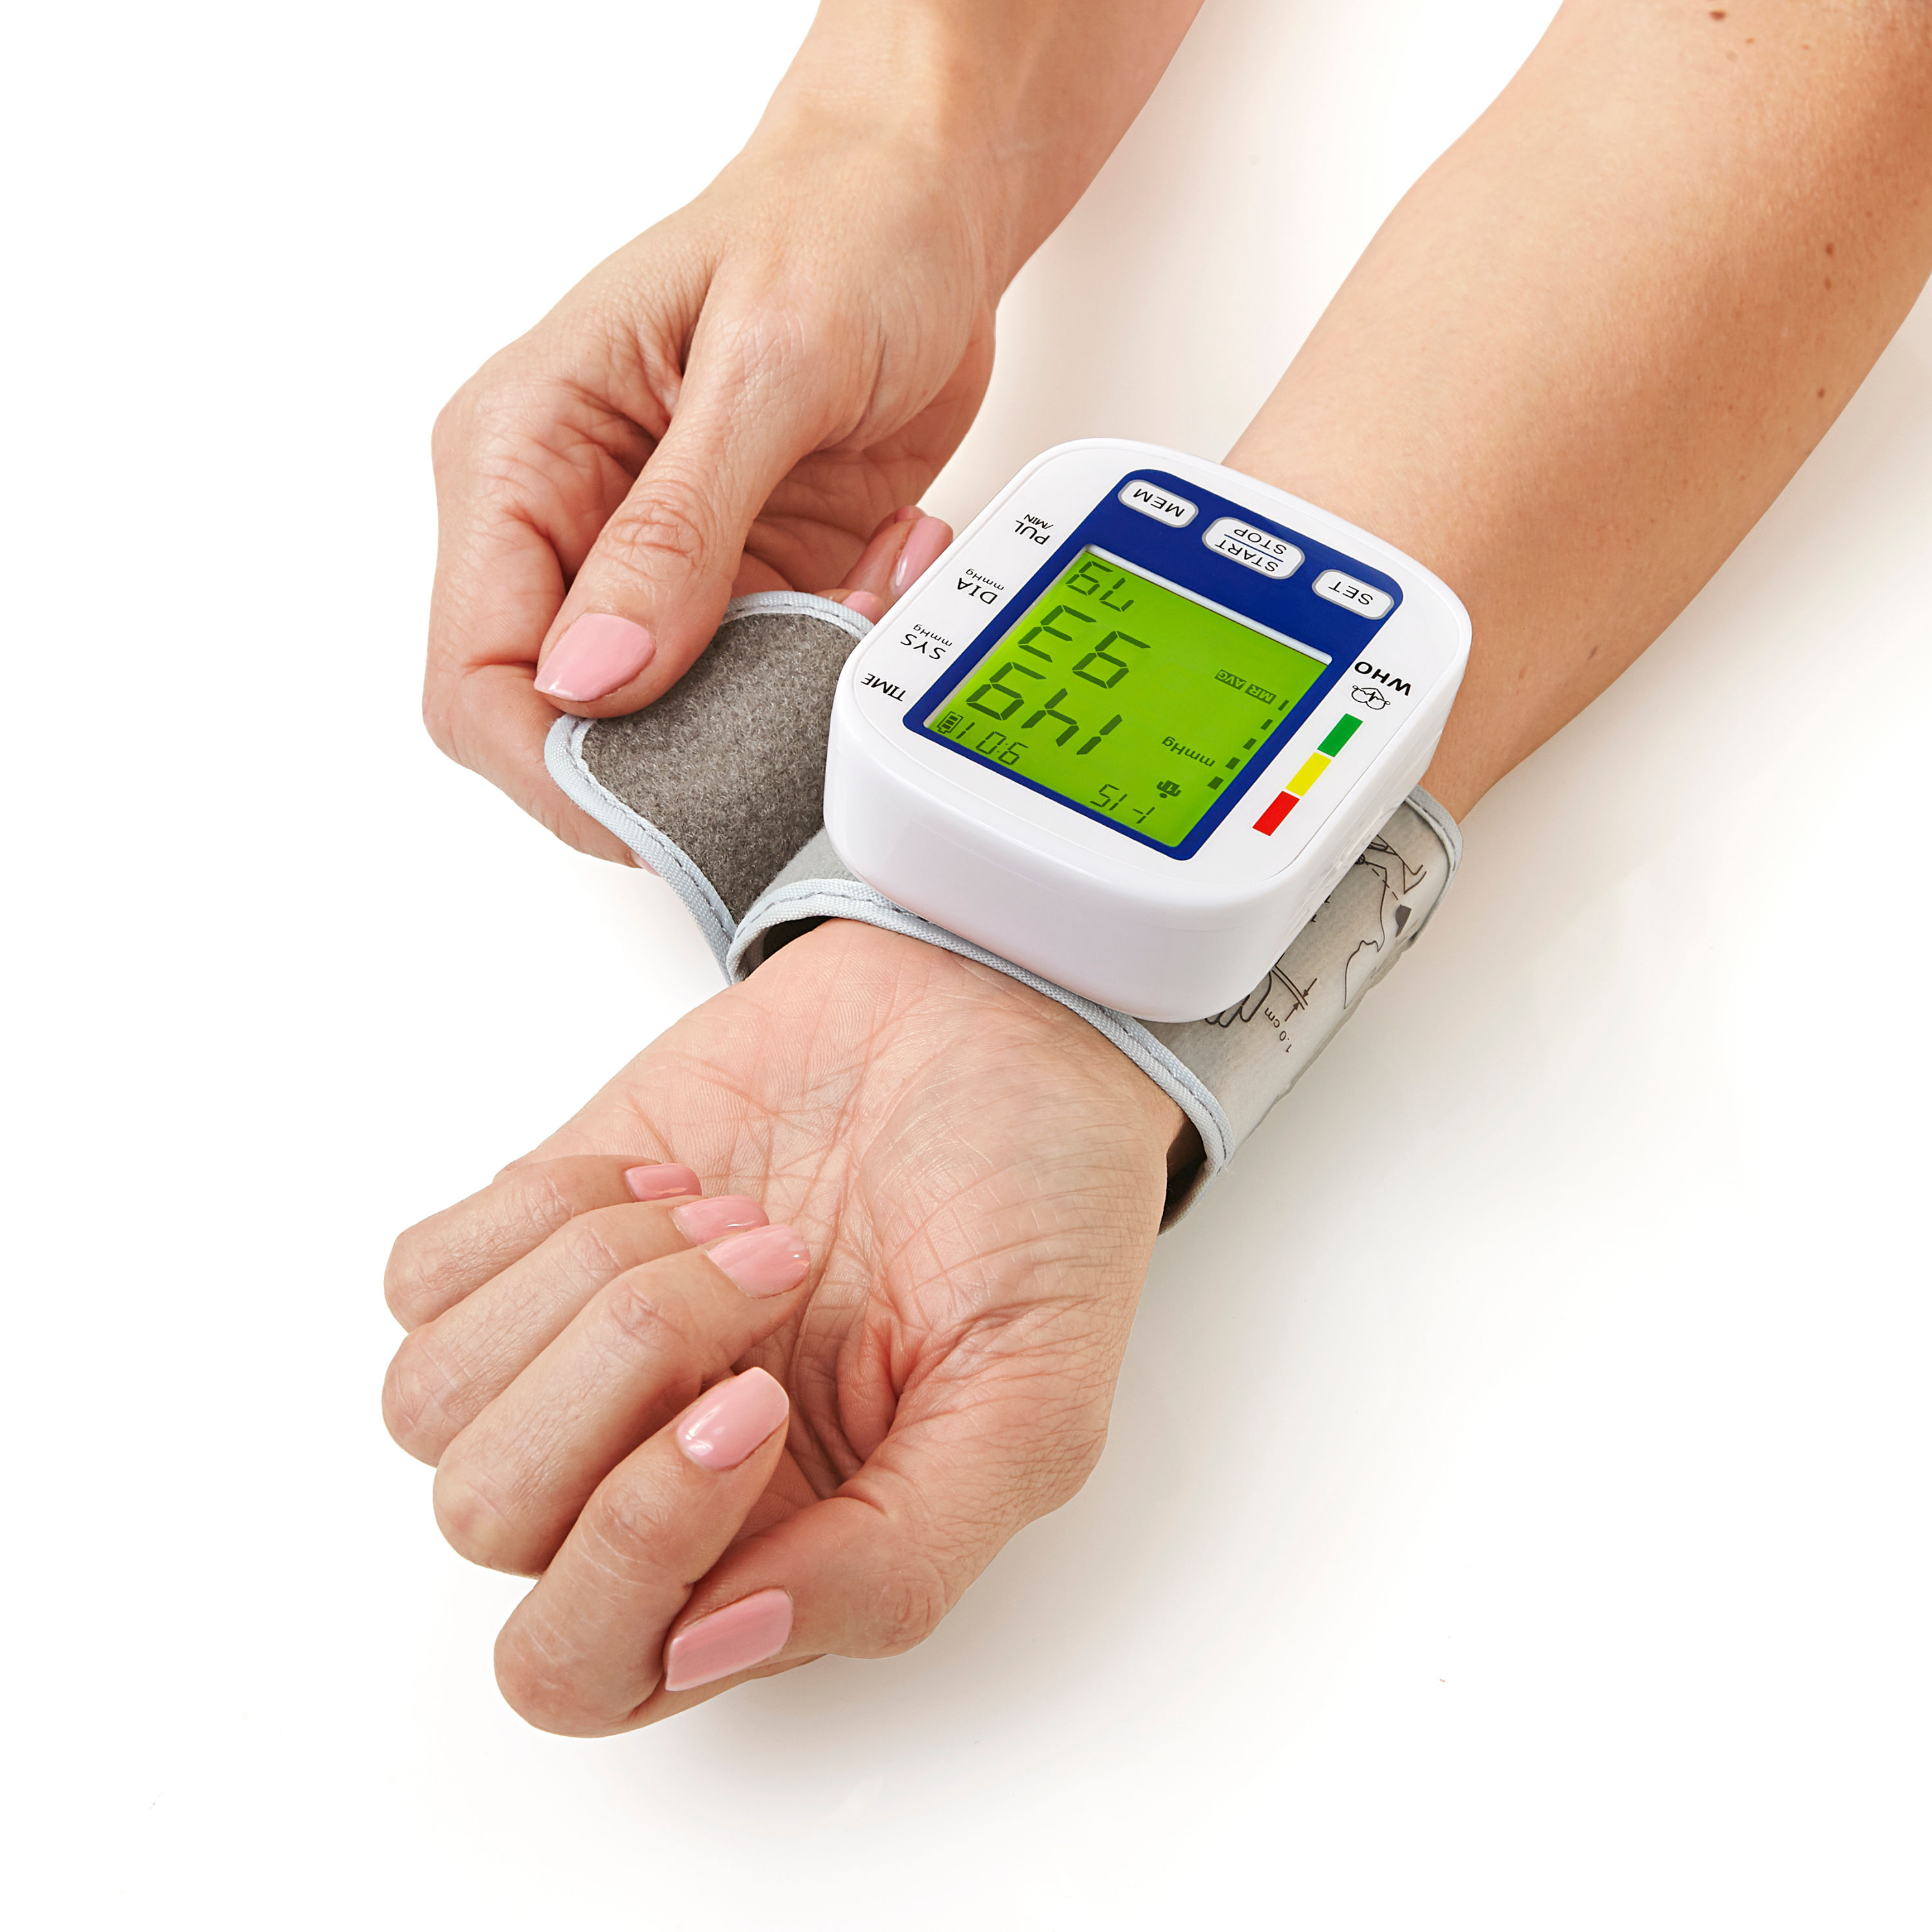 Blutdruckmessgerät Handgelenk jetzt bei Weltbild.at bestellen